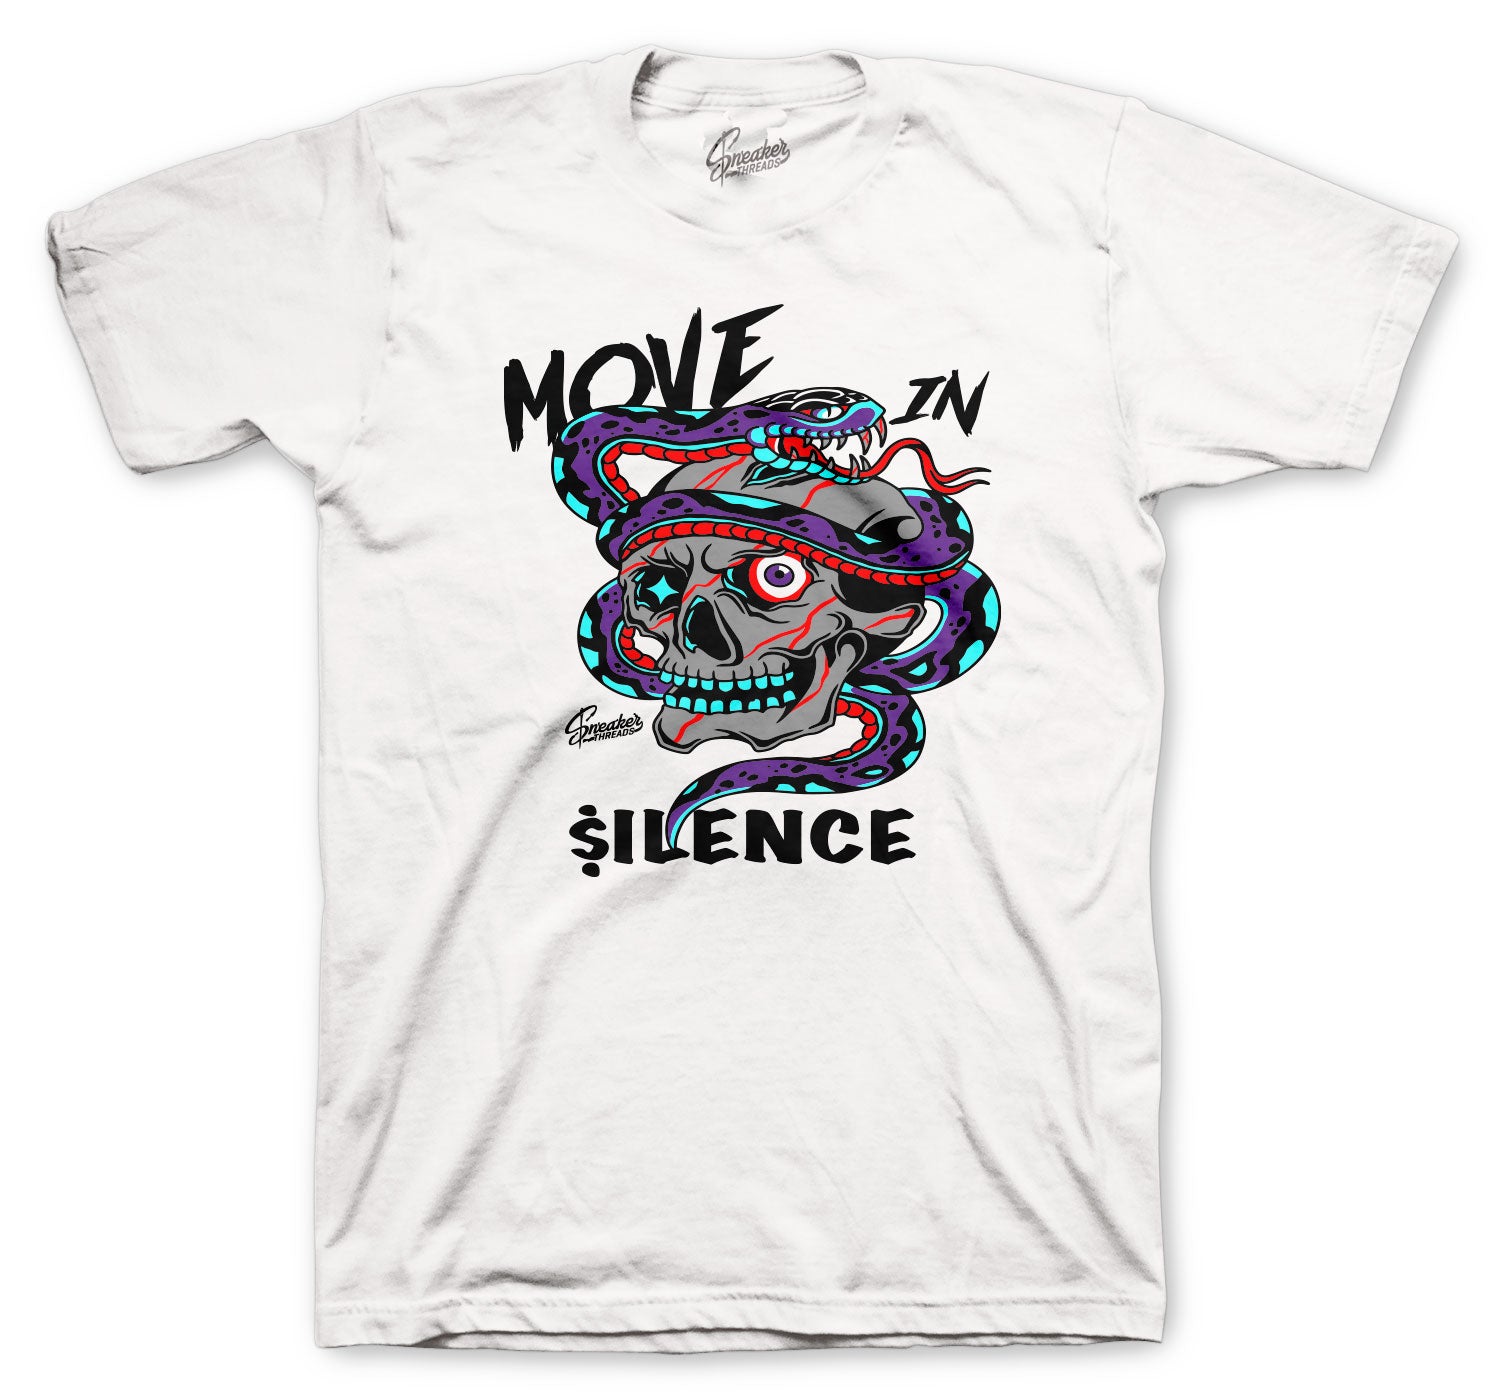 Retro 5 Top 3 Shirt - Move in Silence - White